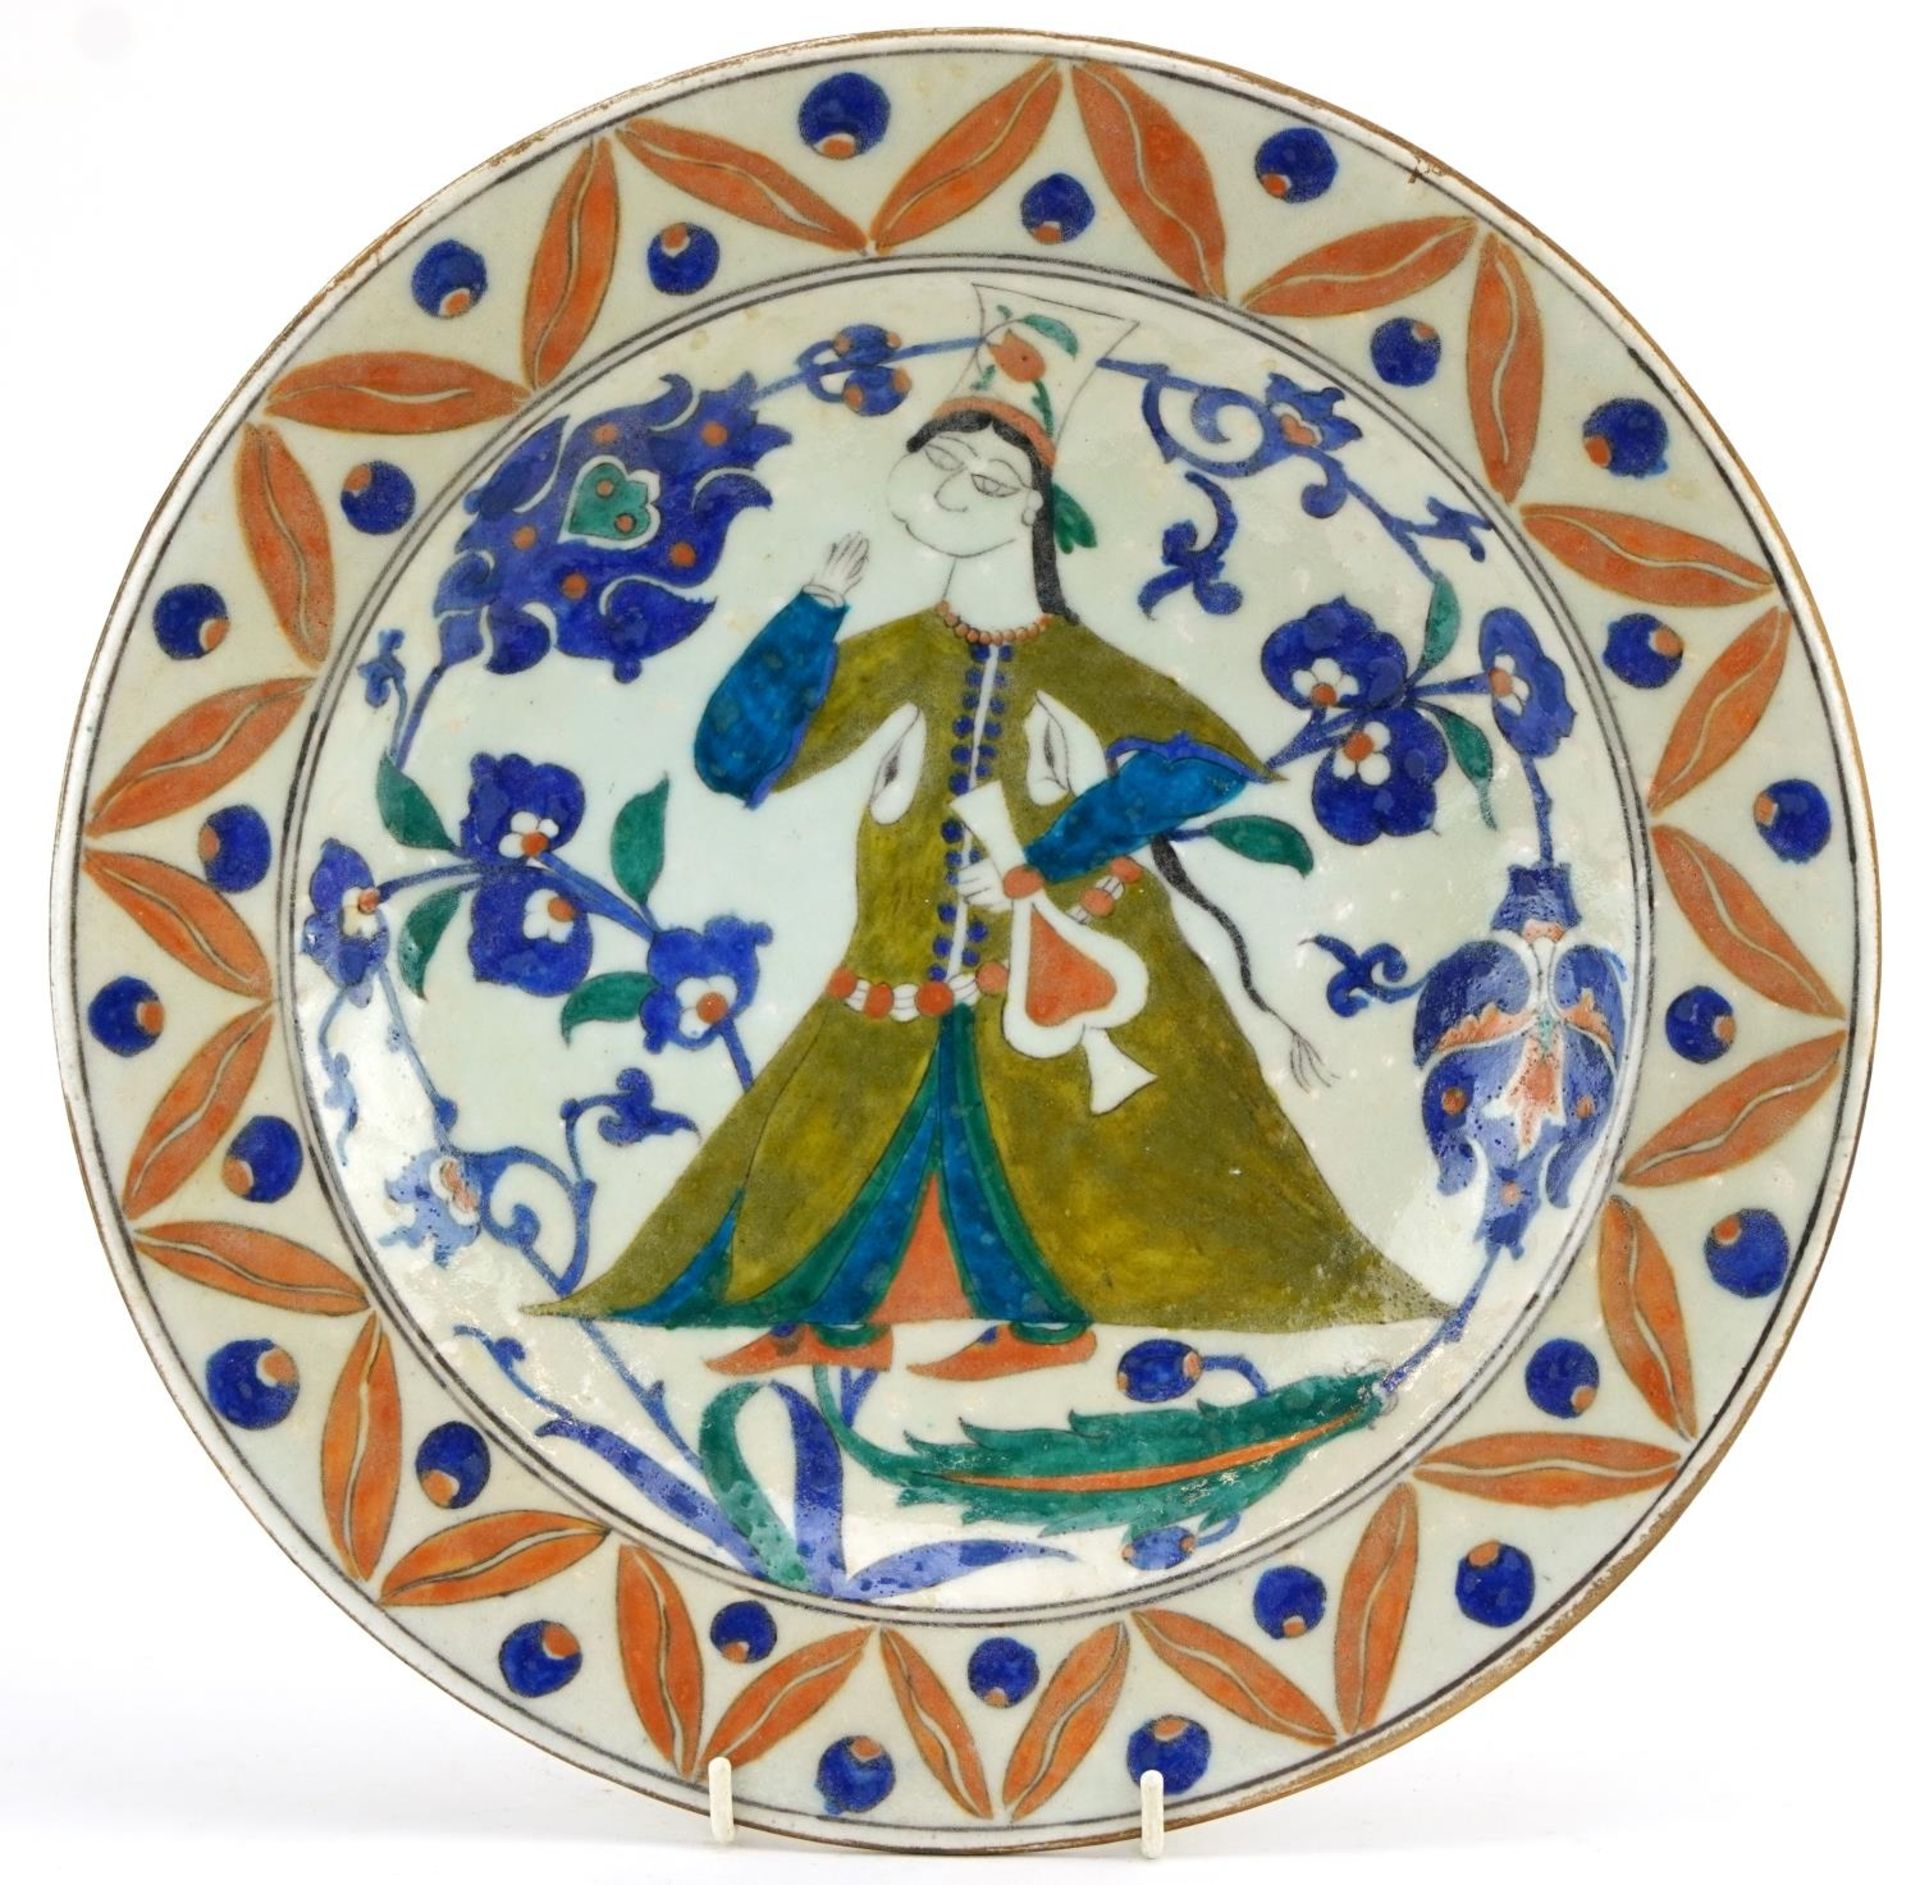 Turkish Ottoman Iznik shallow dish hand painted with a figure wearing traditional dress amongst